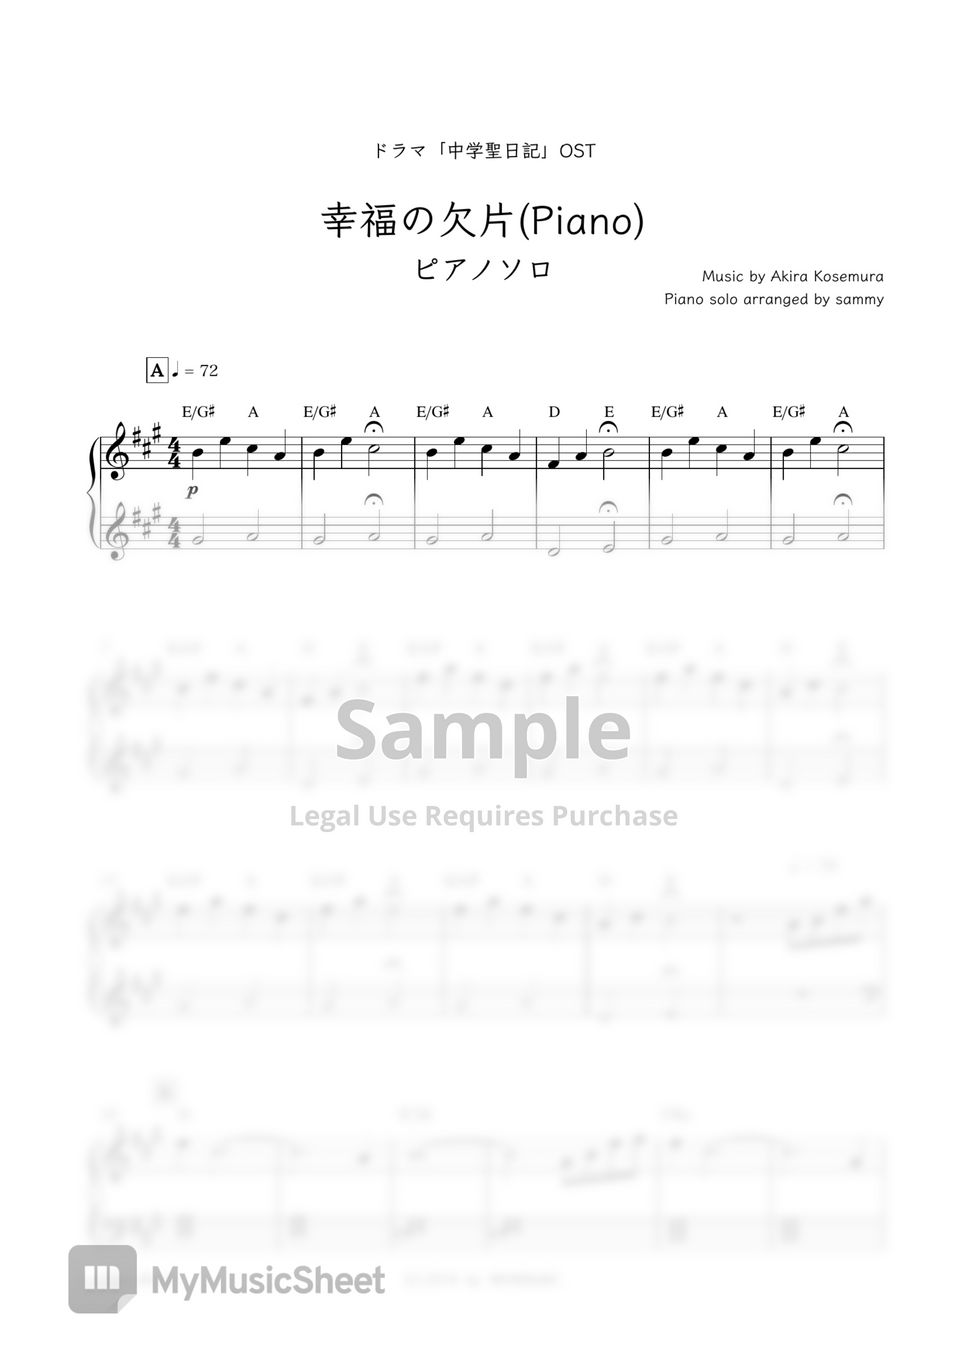 Japanese Drama "Chūgakusei Nikki(中学聖日記)" OST - Kofuku No Kakera [Piano] (幸福の欠片 [Piano]) by sammy